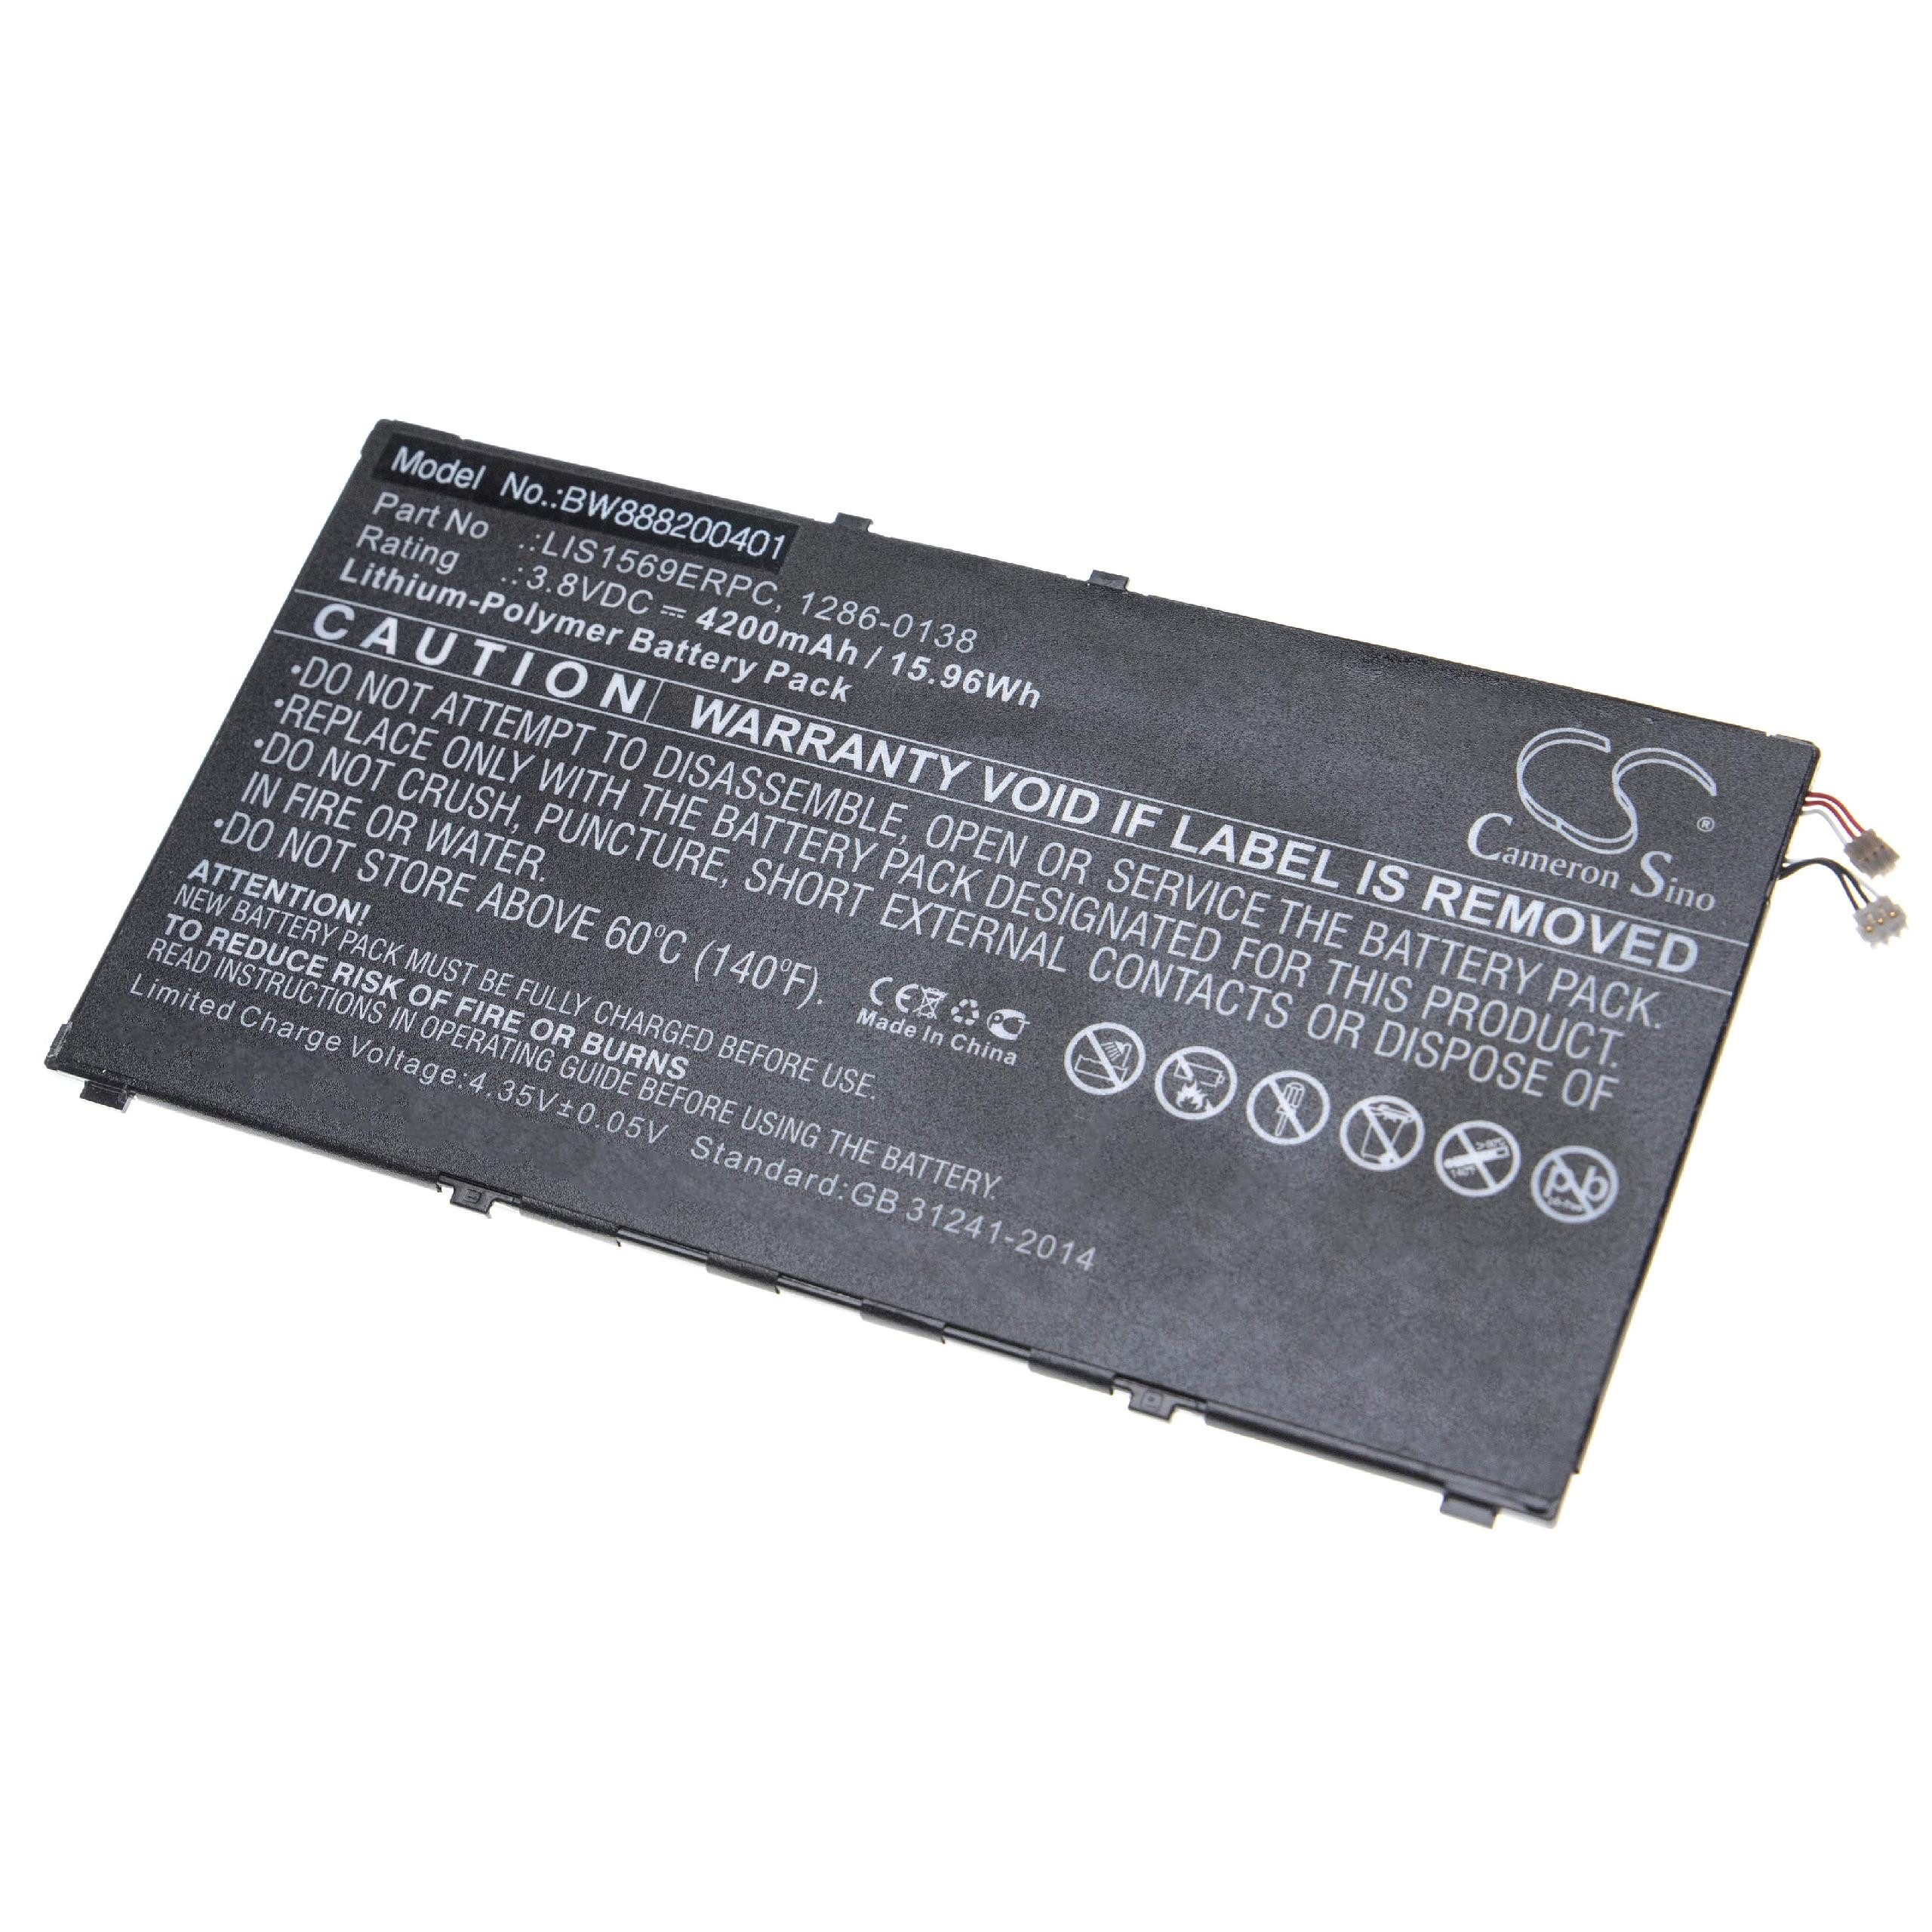 (3,8 Handy-Akku LIS1569C, für 1286-0138 Ersatz Sony 4200 V) mAh vhbw Li-Polymer für